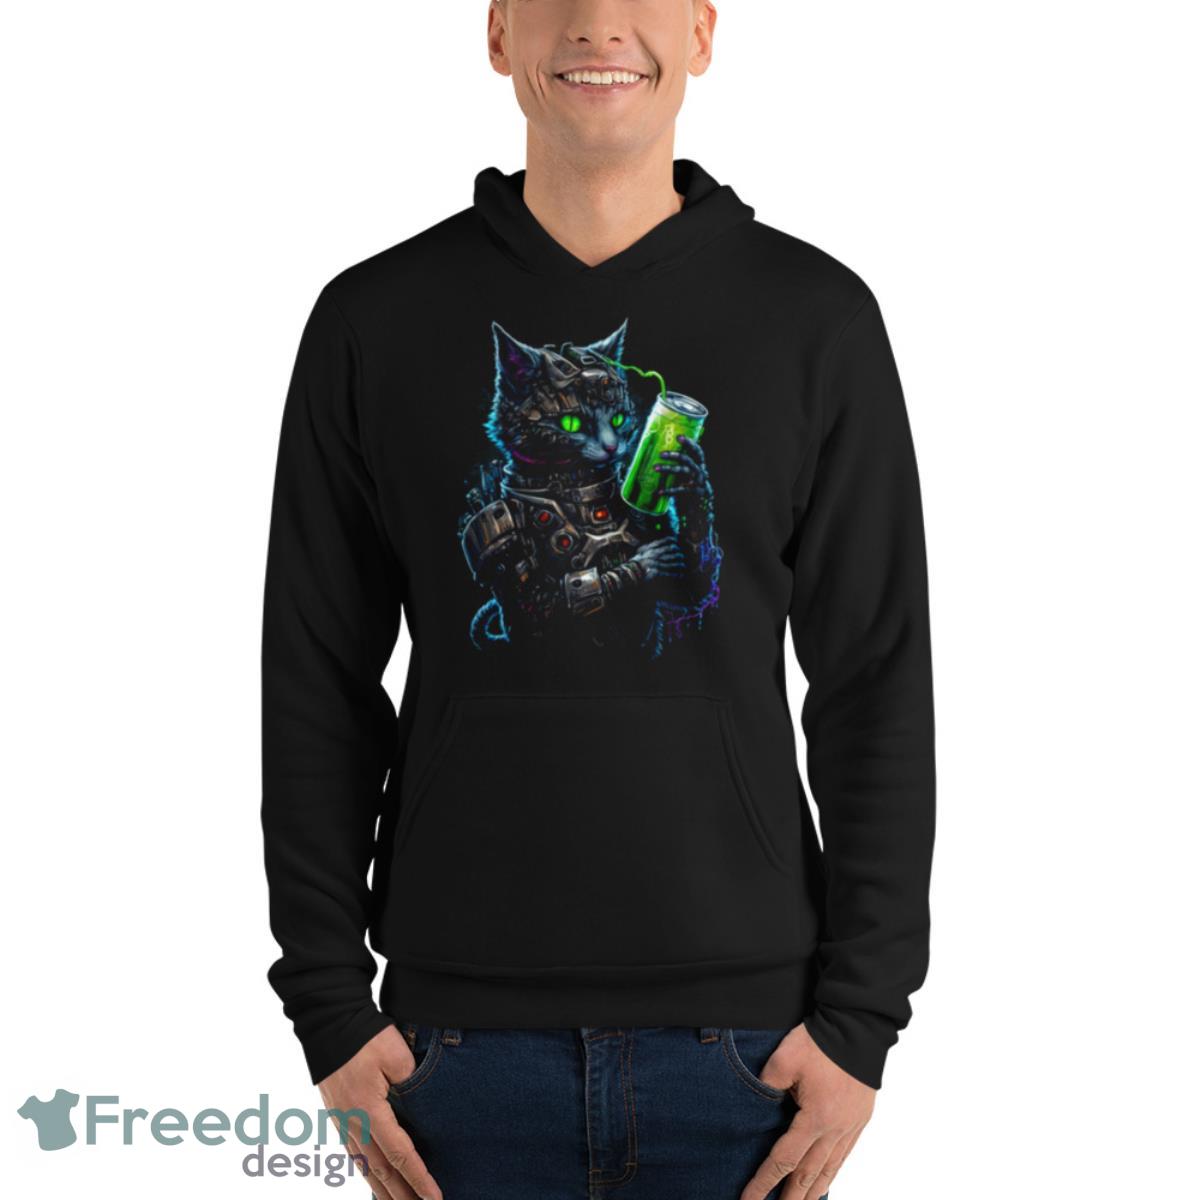 Cyborg Energy Fuel Cat shirt